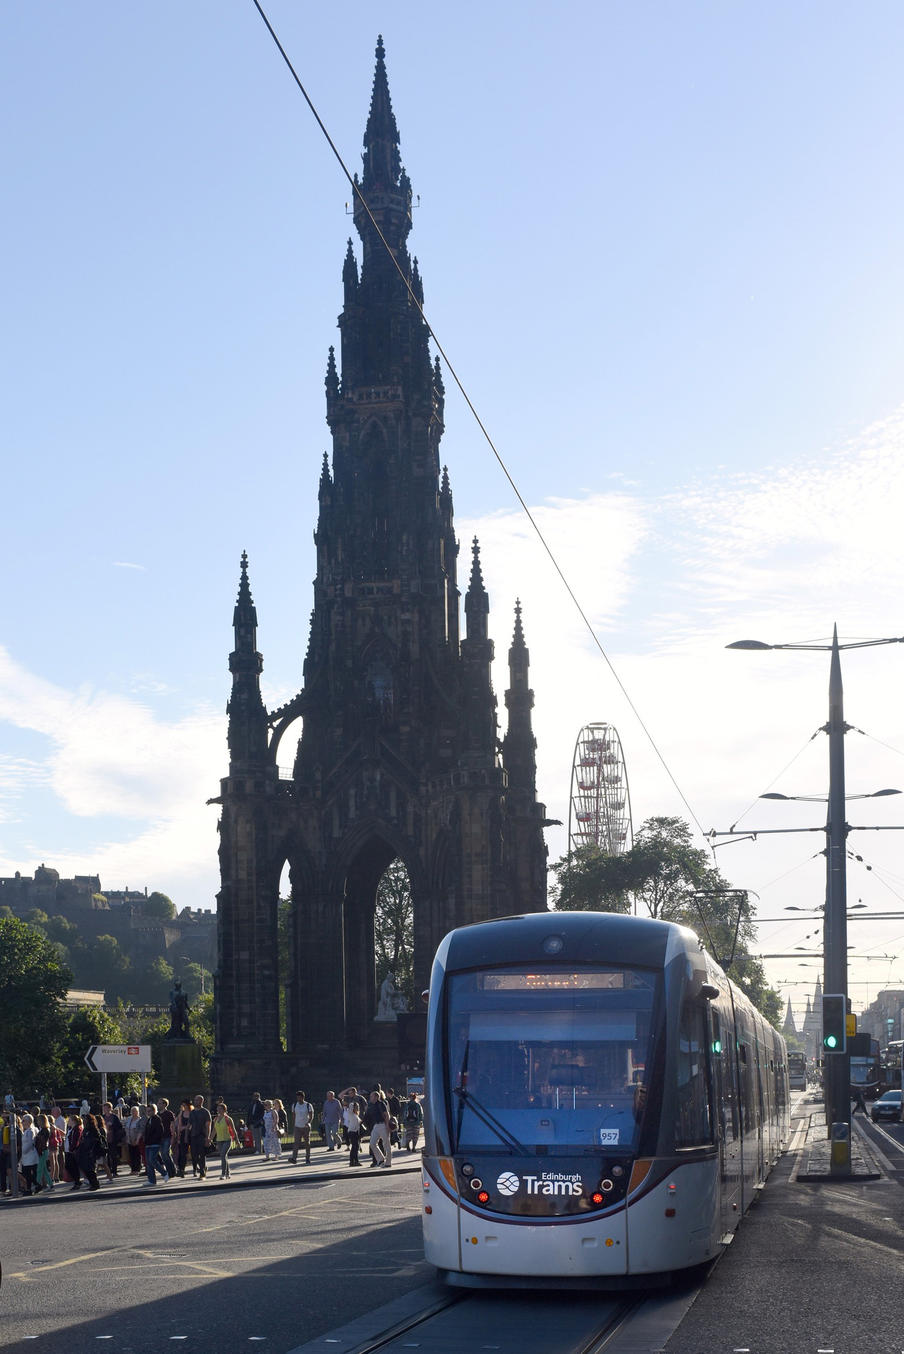 Edinburgh Tram in Front of Scot Monument